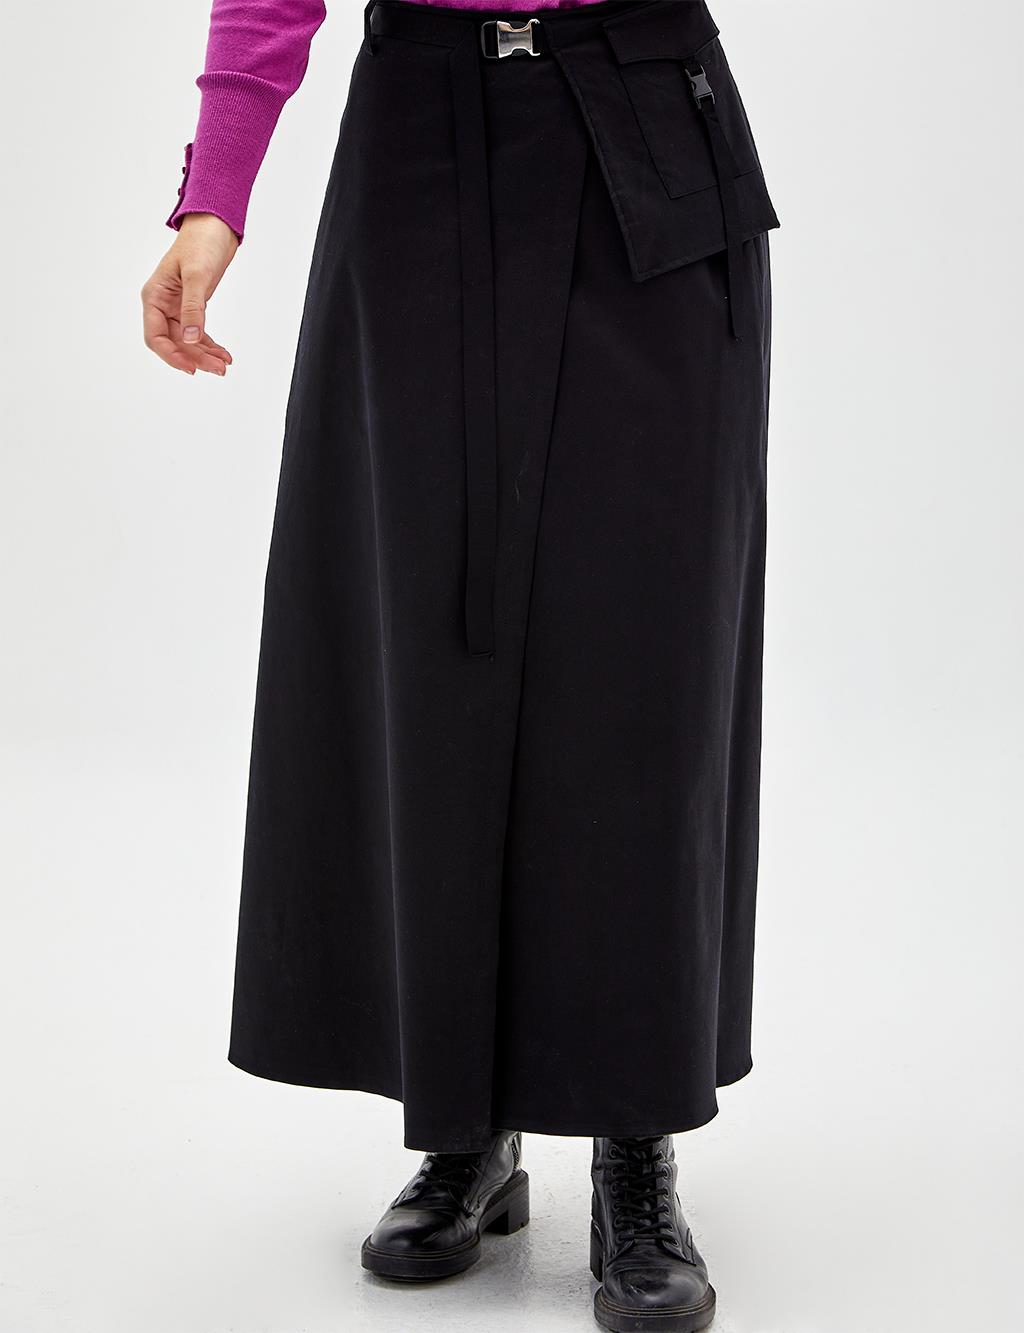 A-Line Skirt with Big Pockets Black